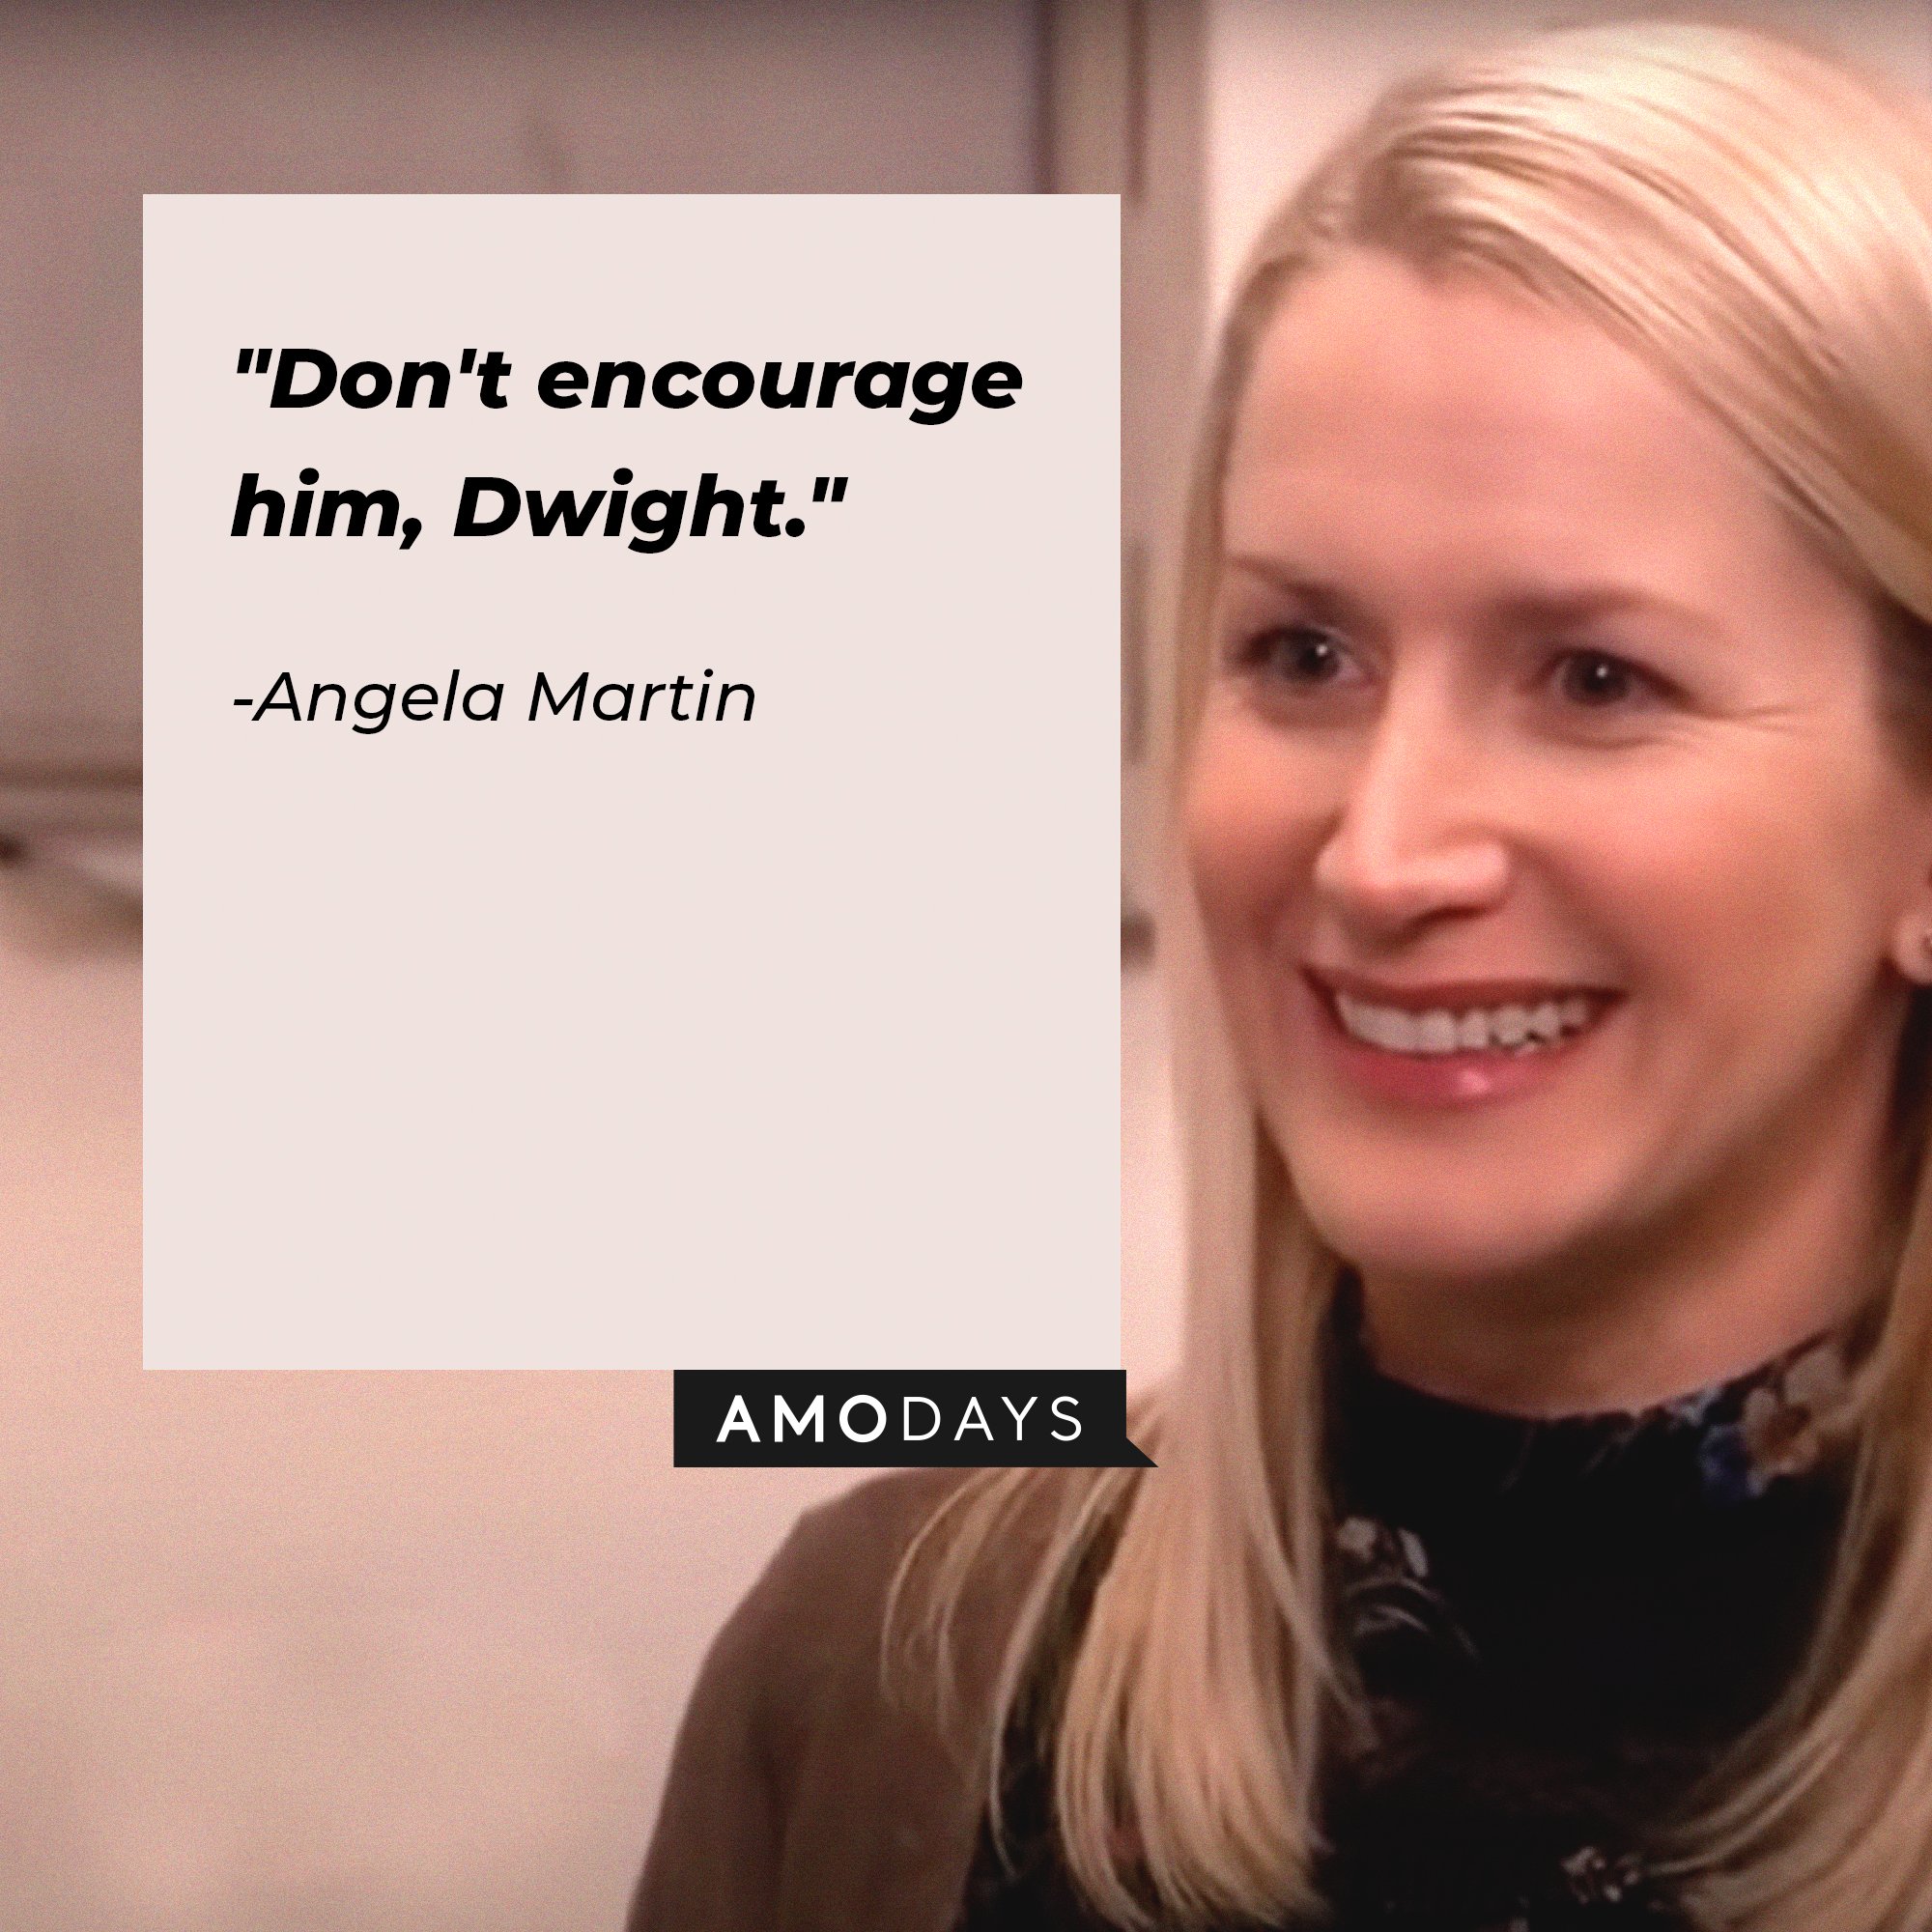 Angela Martin’s quote: "Don't encourage him, Dwight." | Image: AmoDays